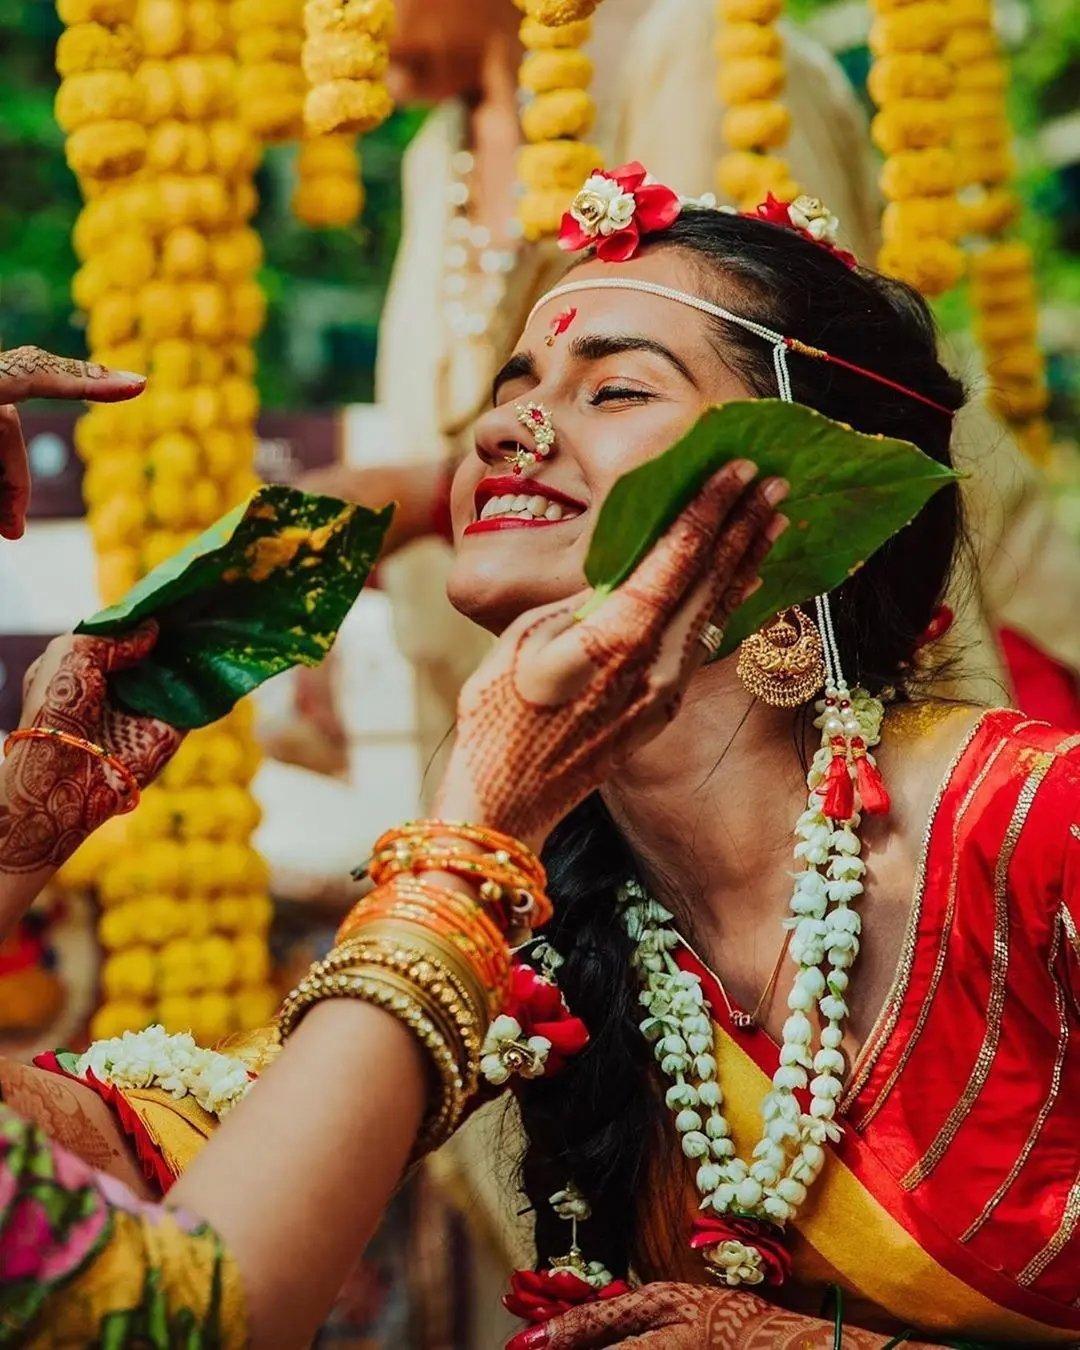 Lovely Nauvari Sarees On Maharashtrian Brides That We Loved! | Nauvari  saree, Saree photoshoot, Indian wedding photography poses